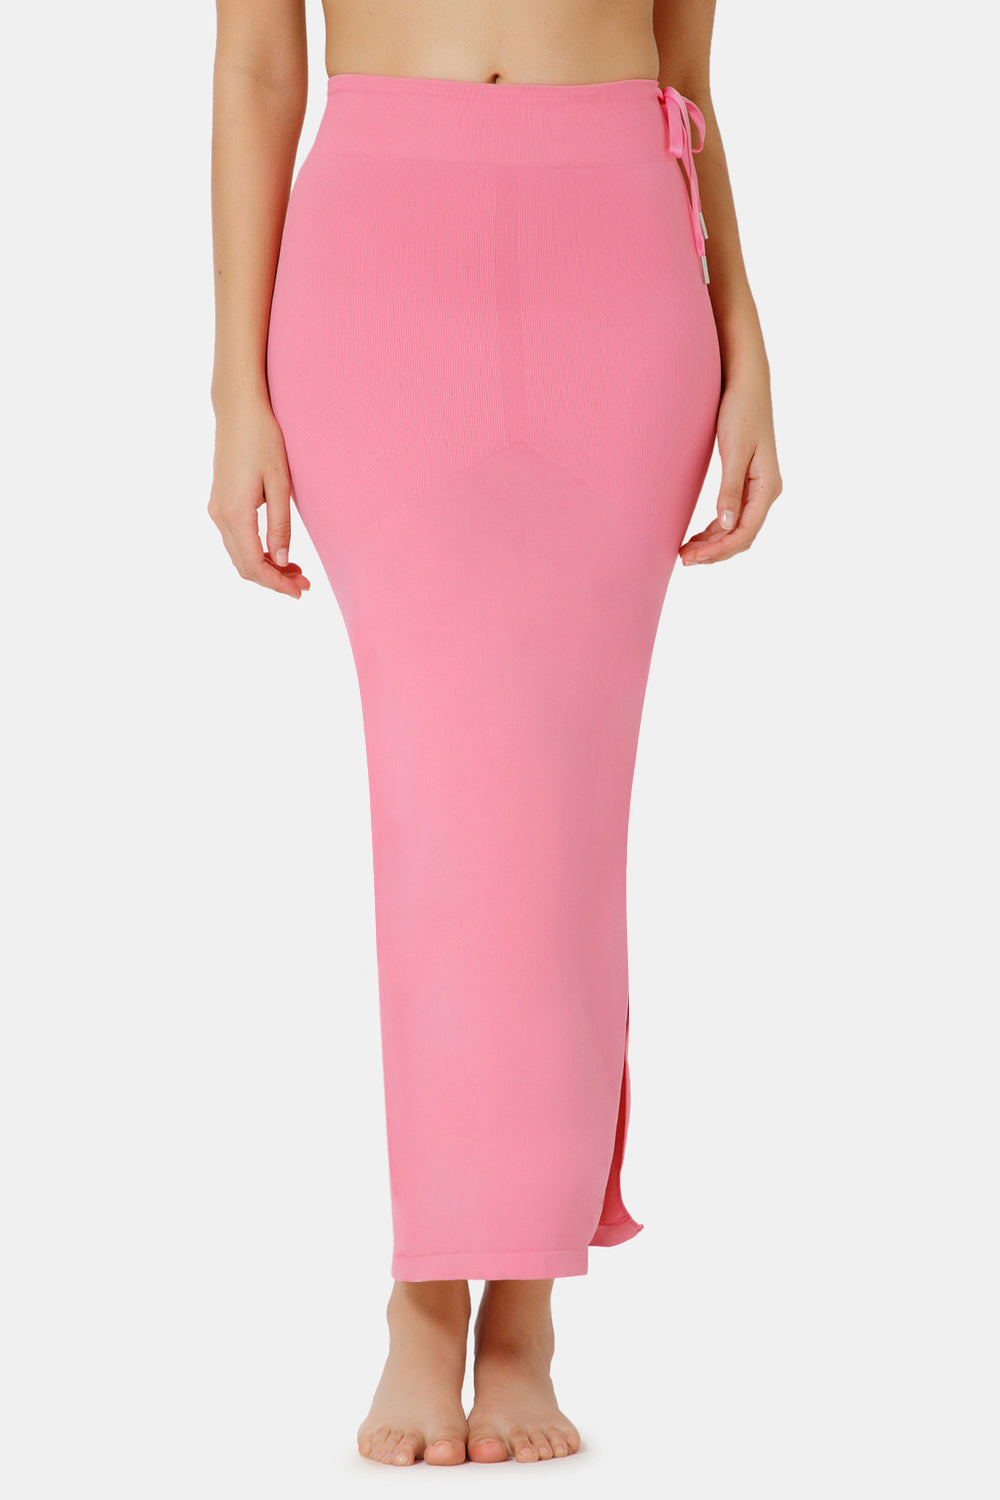 Intimacy Seamless Sweat Absorbent Mermaid Saree Shapewear - Pink - SW0